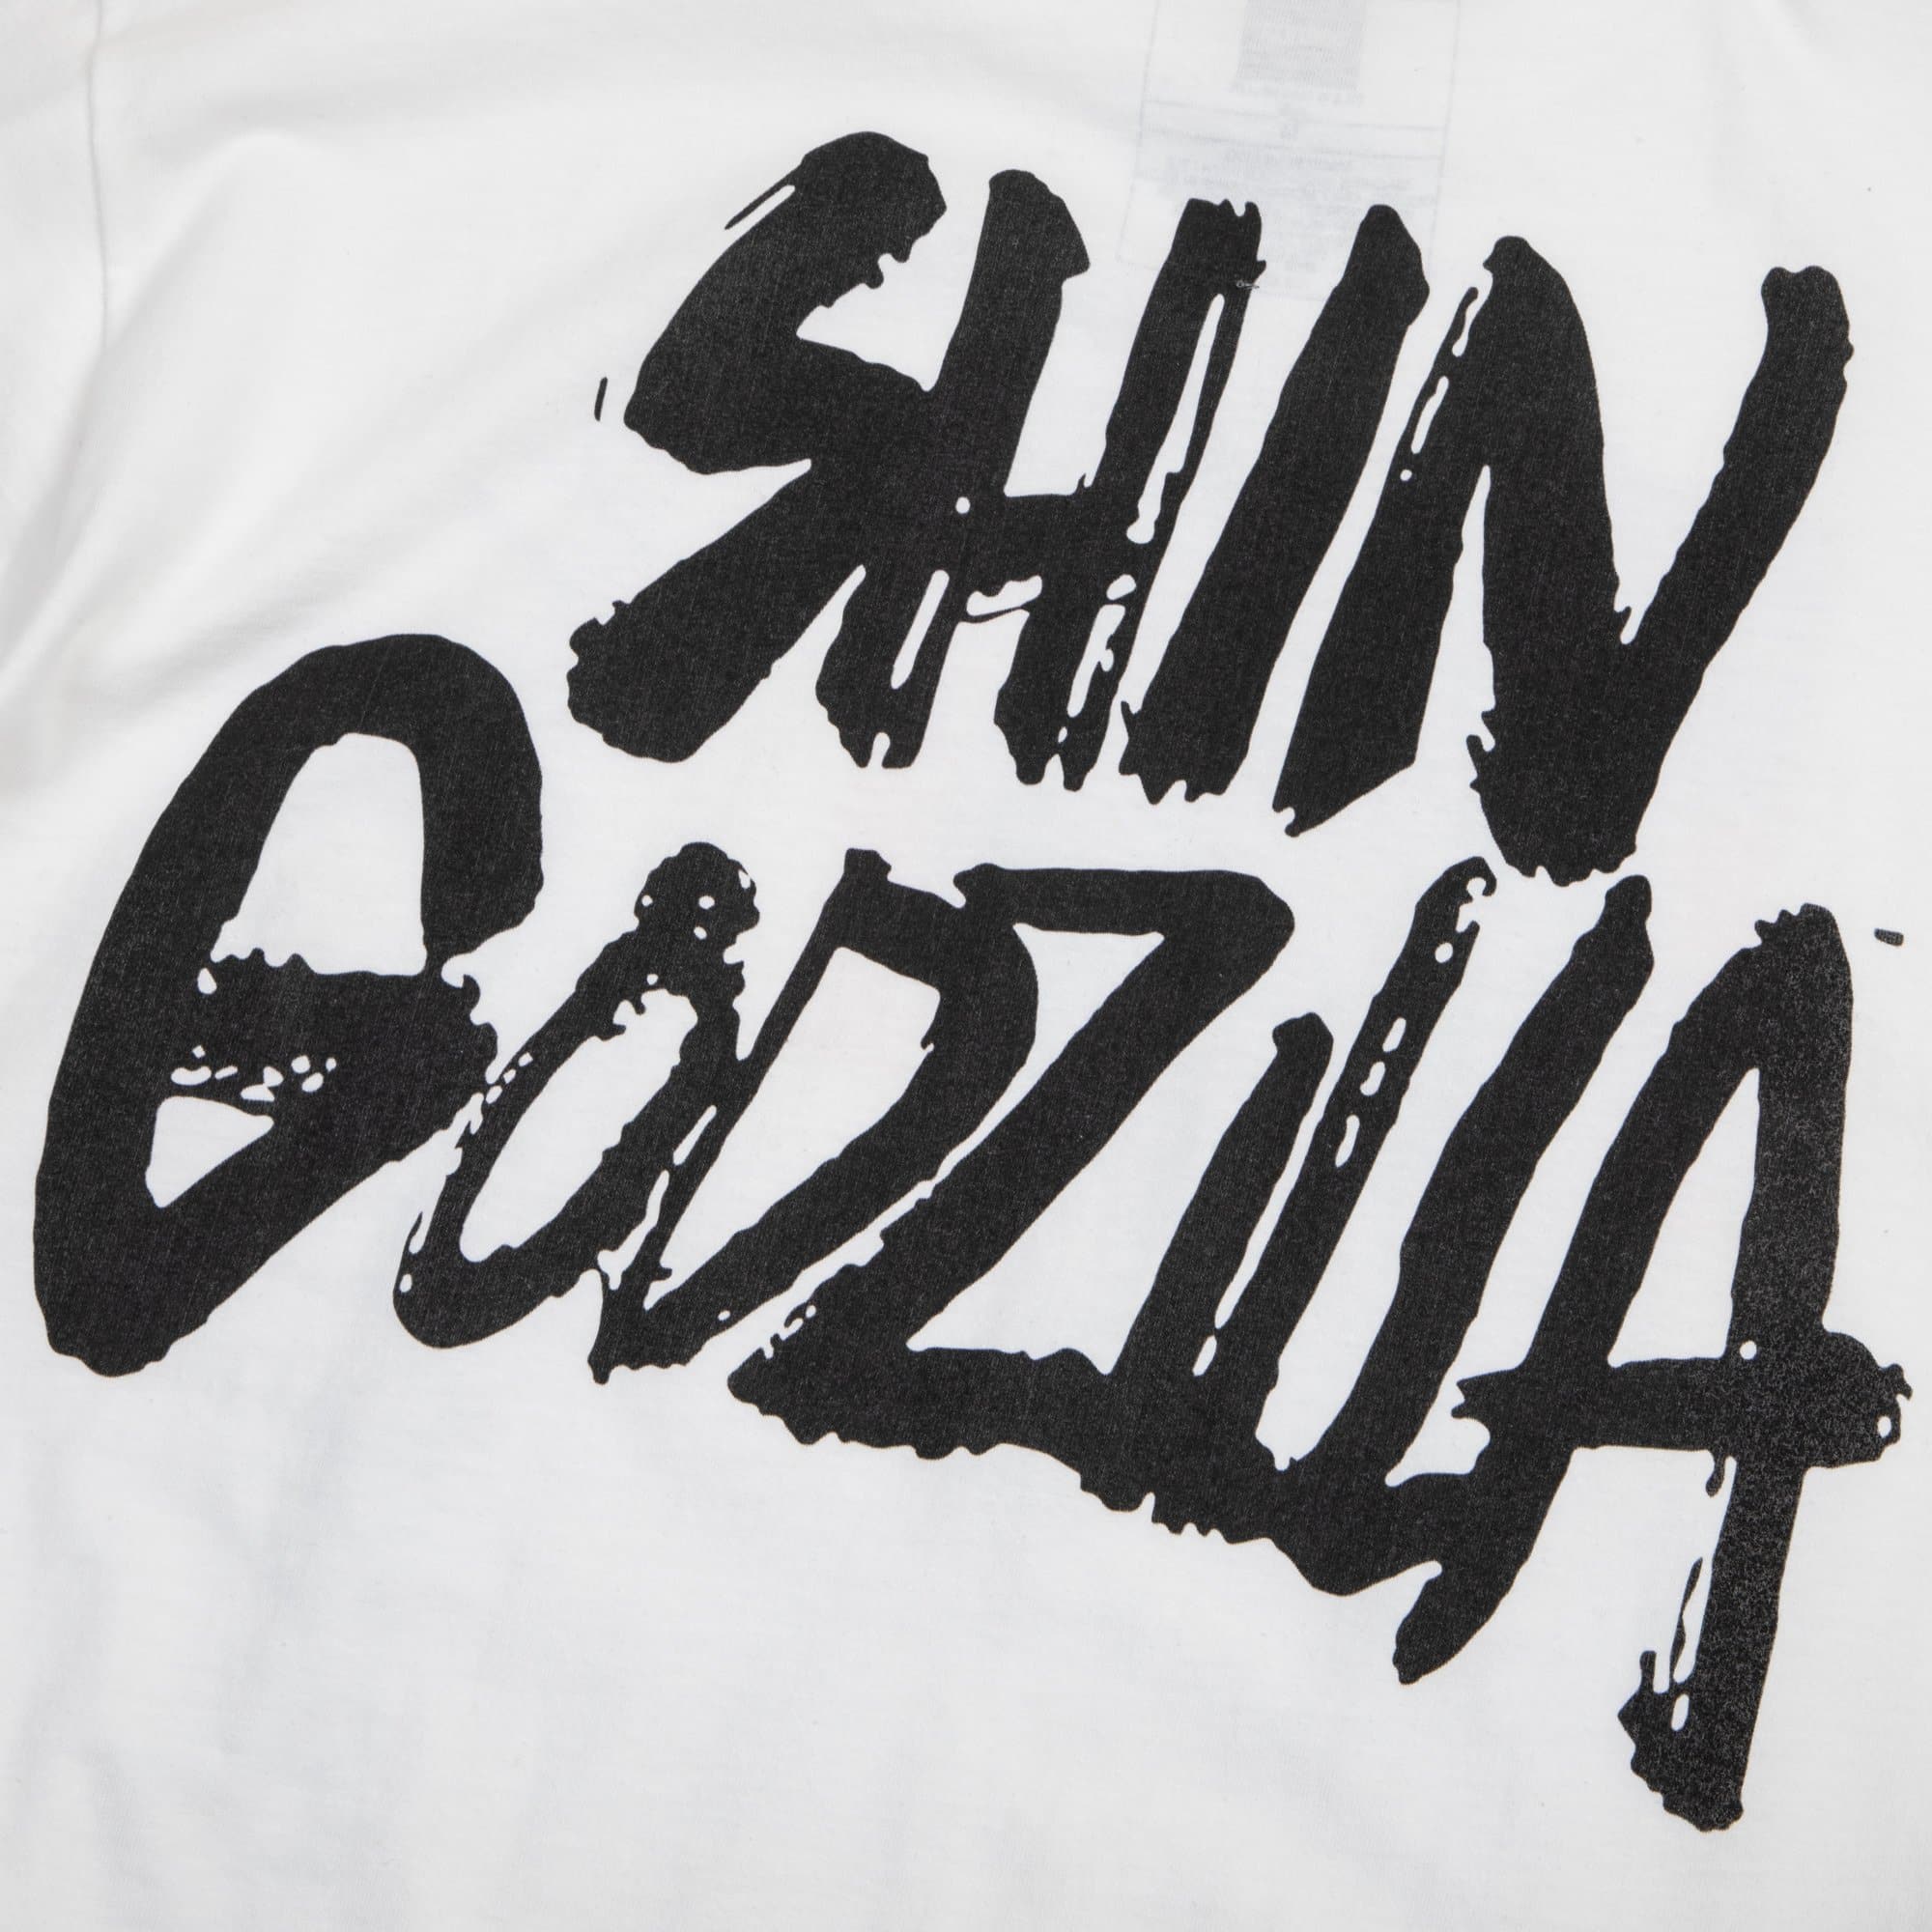 Shin Godzilla White Long Sleeve